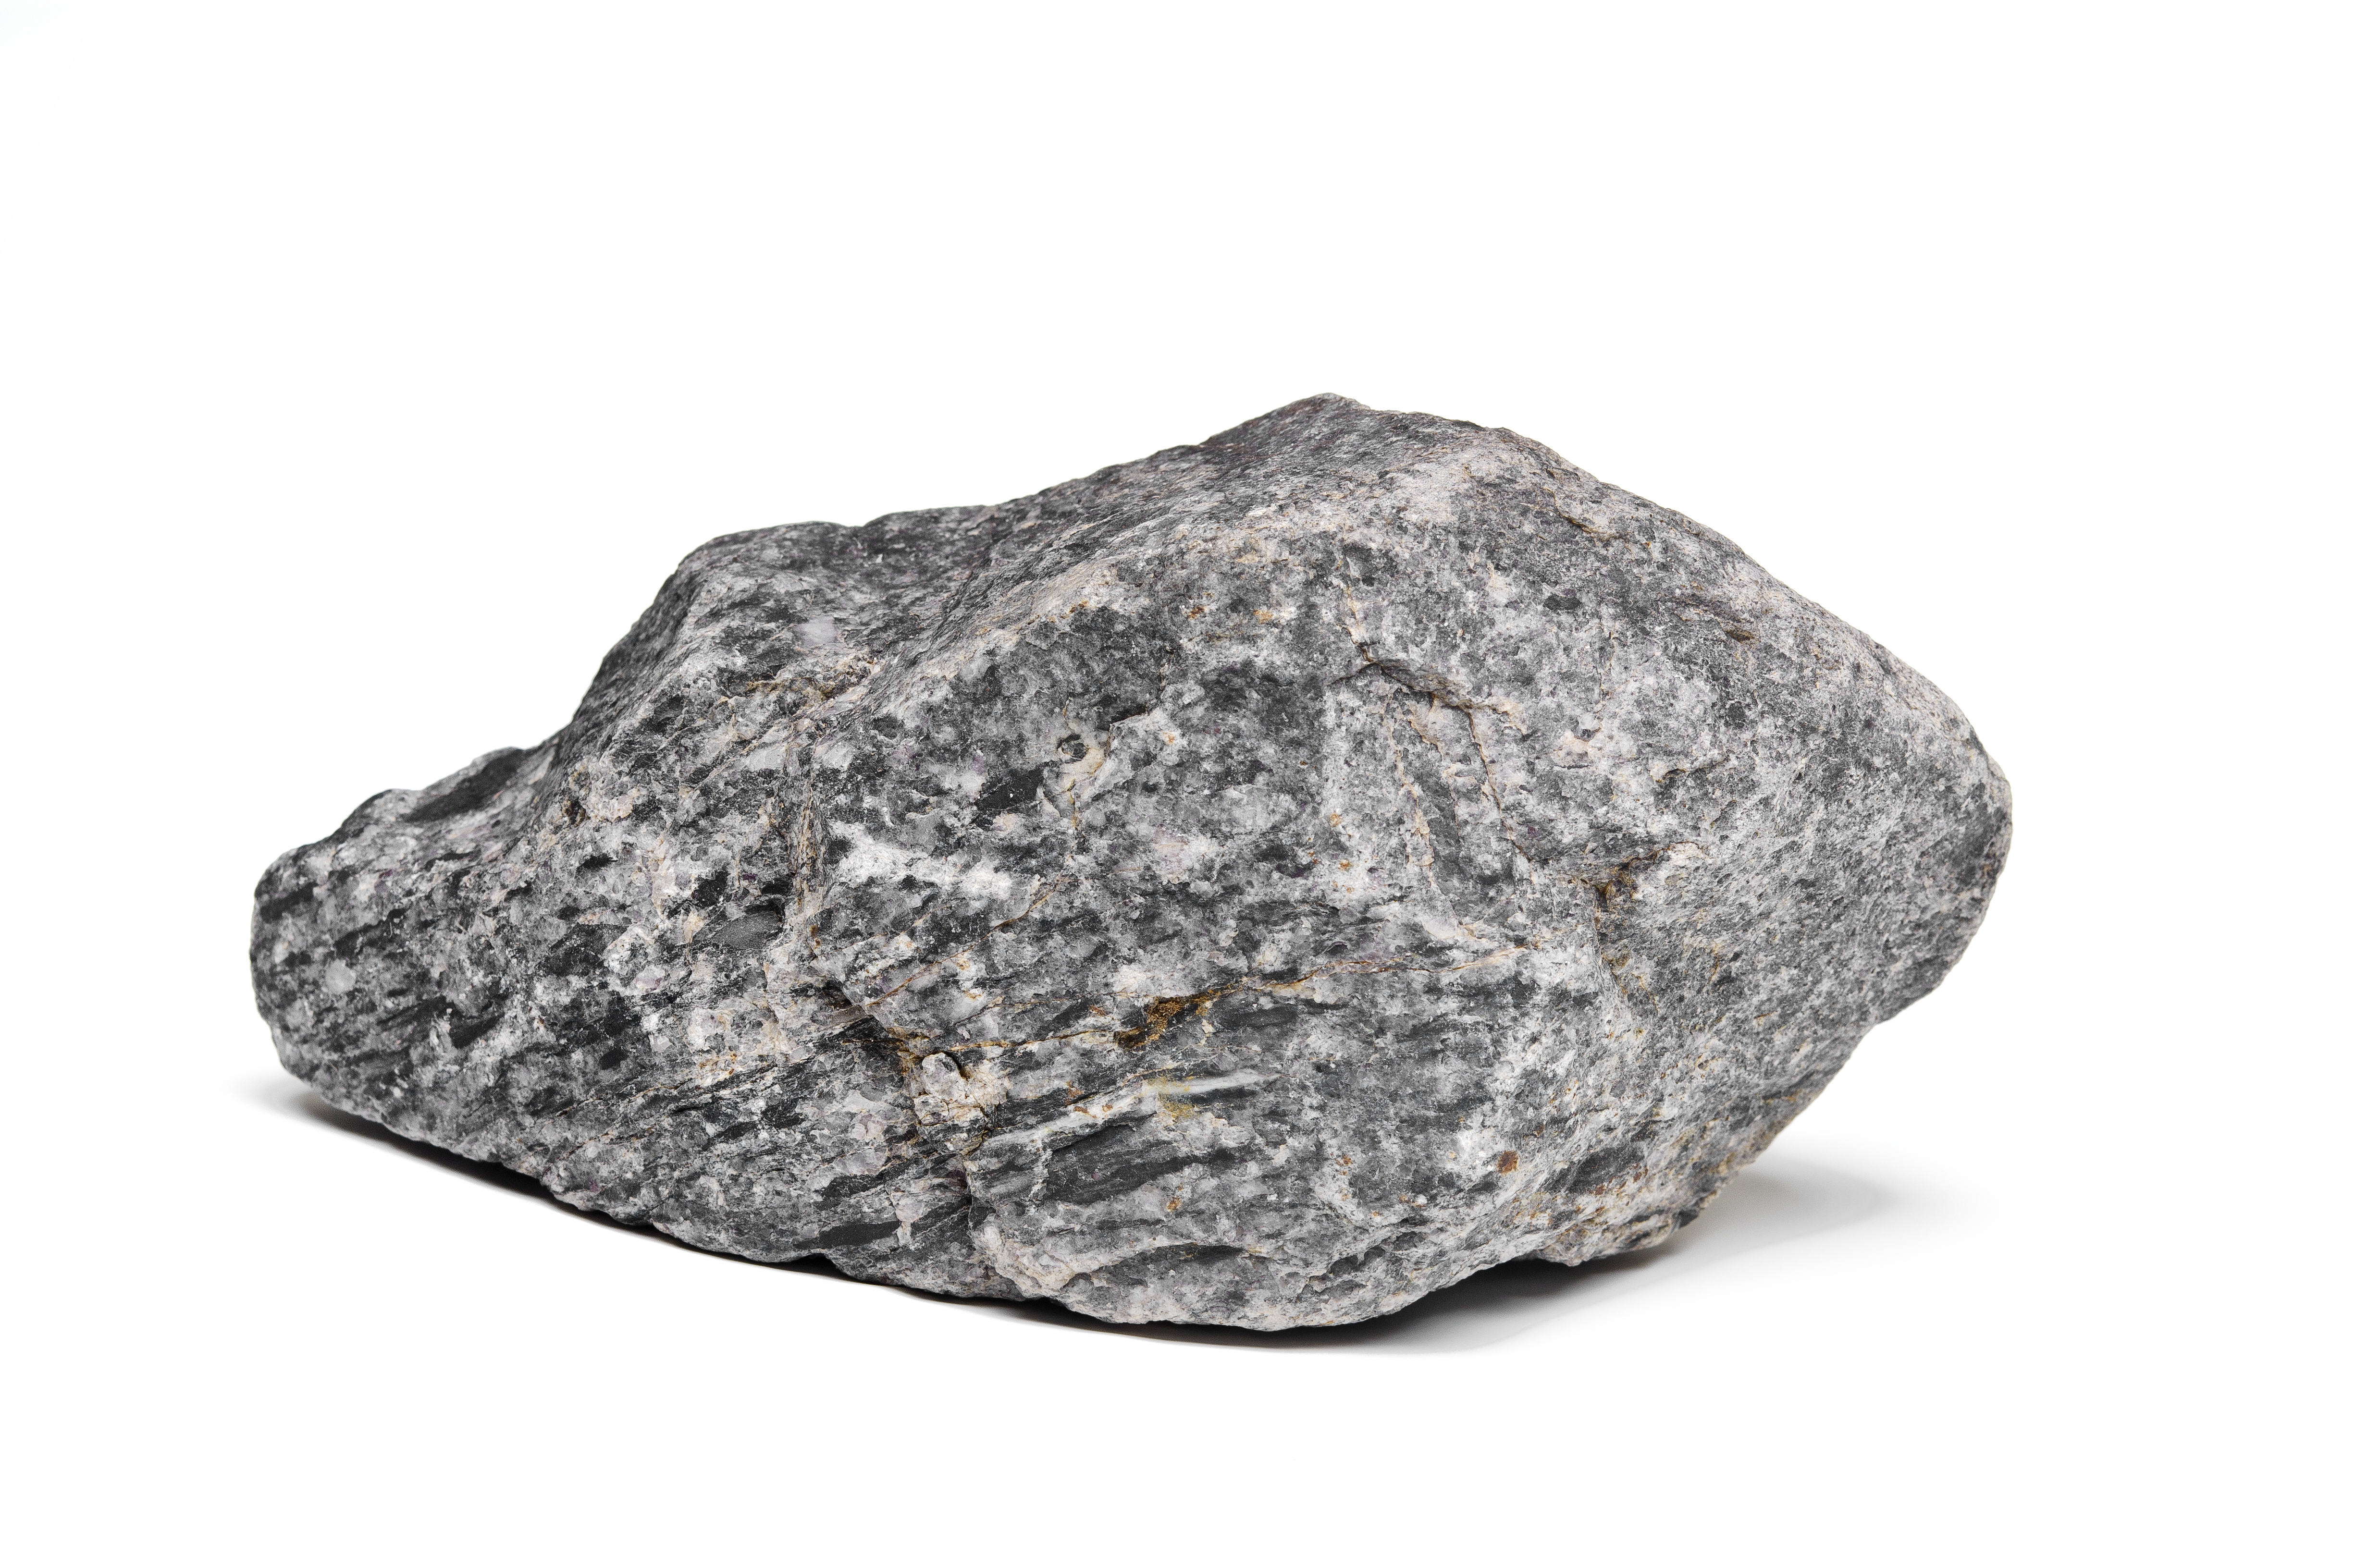 A rock | Source: Shutterstock